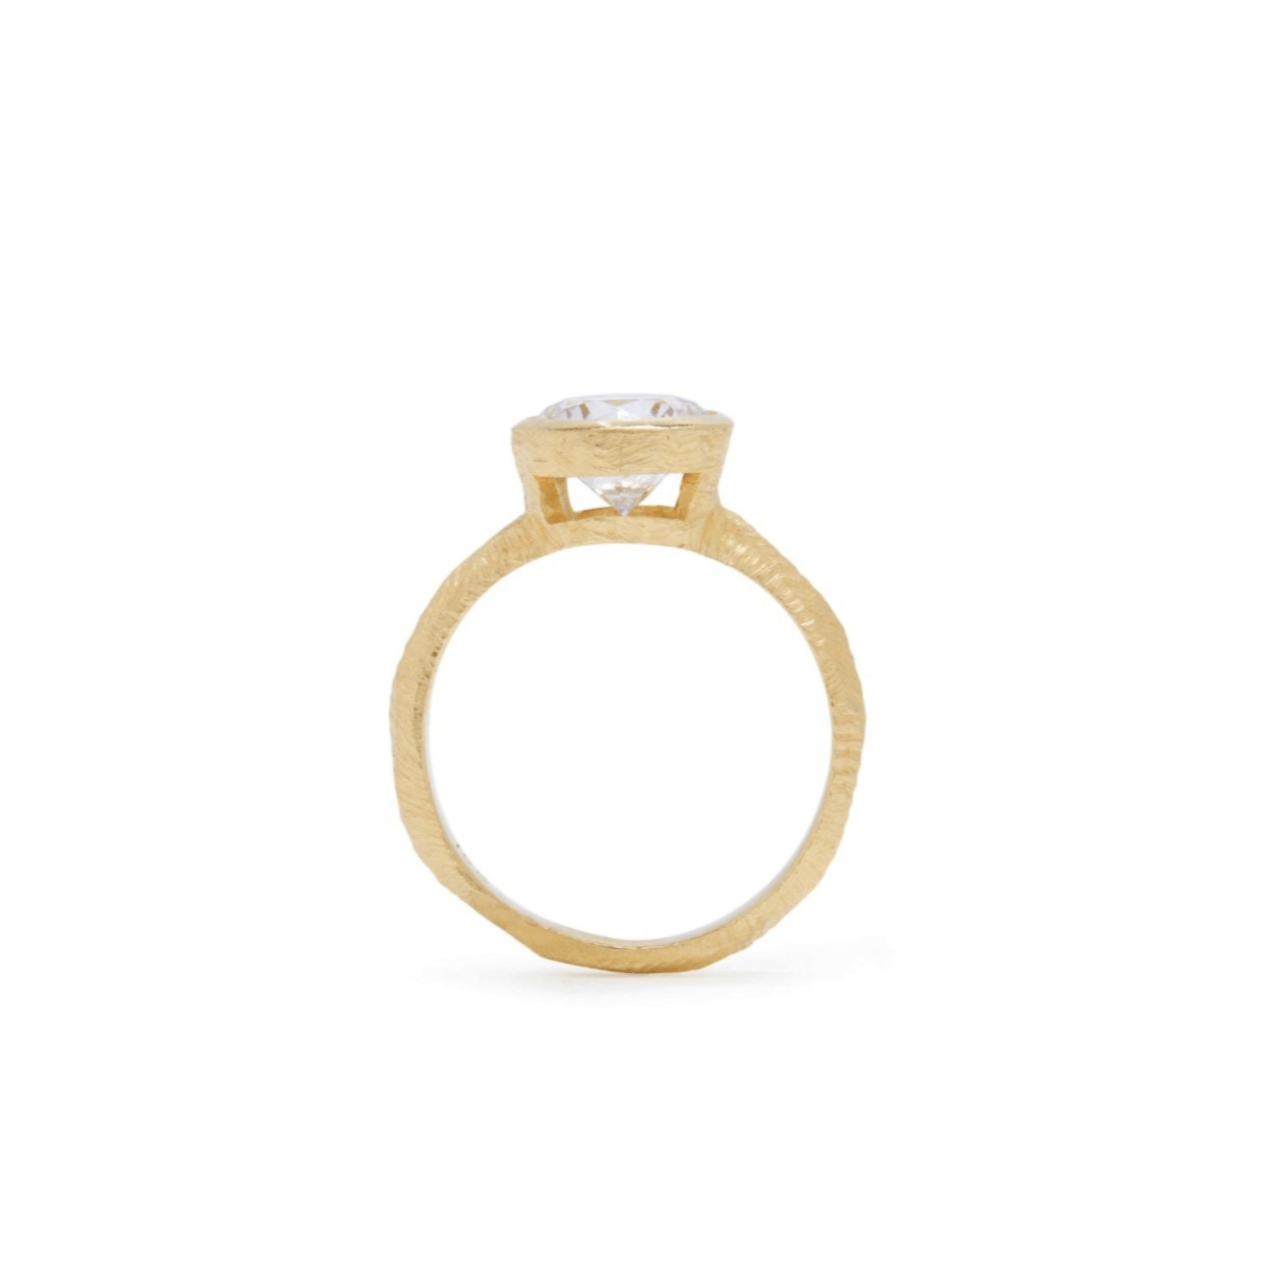 Handmade custom diamond engagement ring in 18kt gold made in Brooklyn.